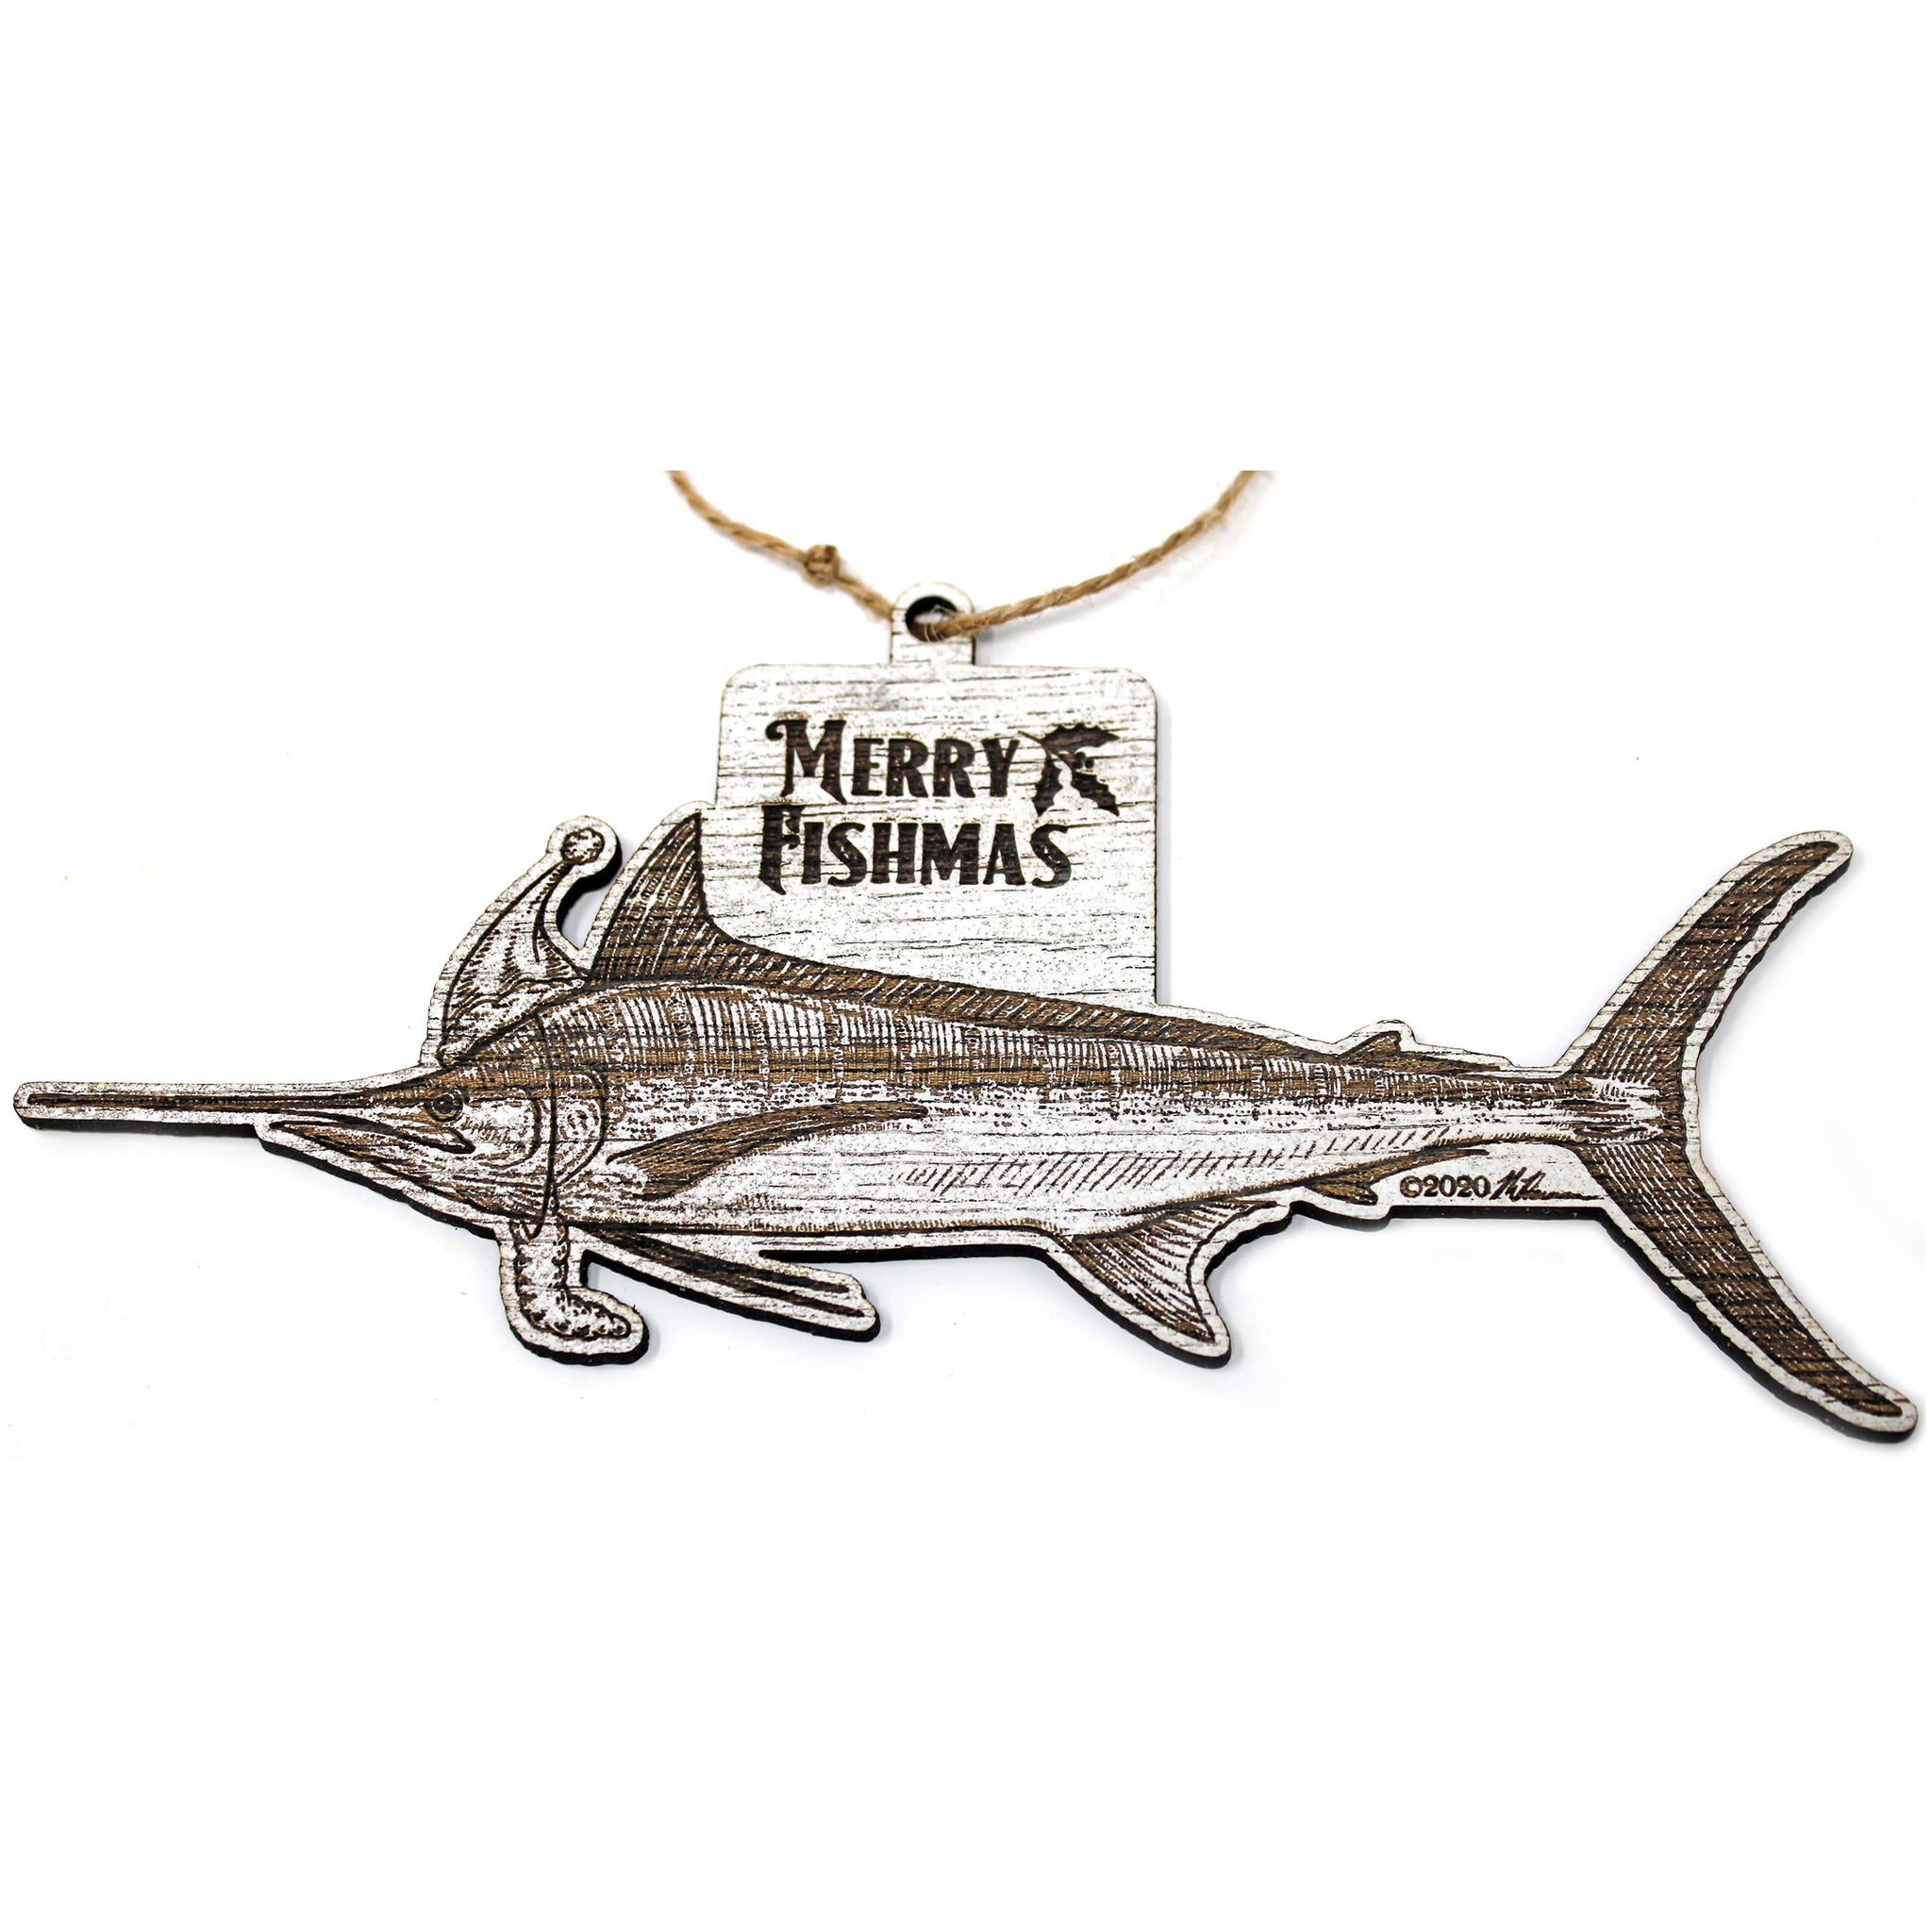 Wood Christmas Ornaments - Marlin Fishmas Ornaments